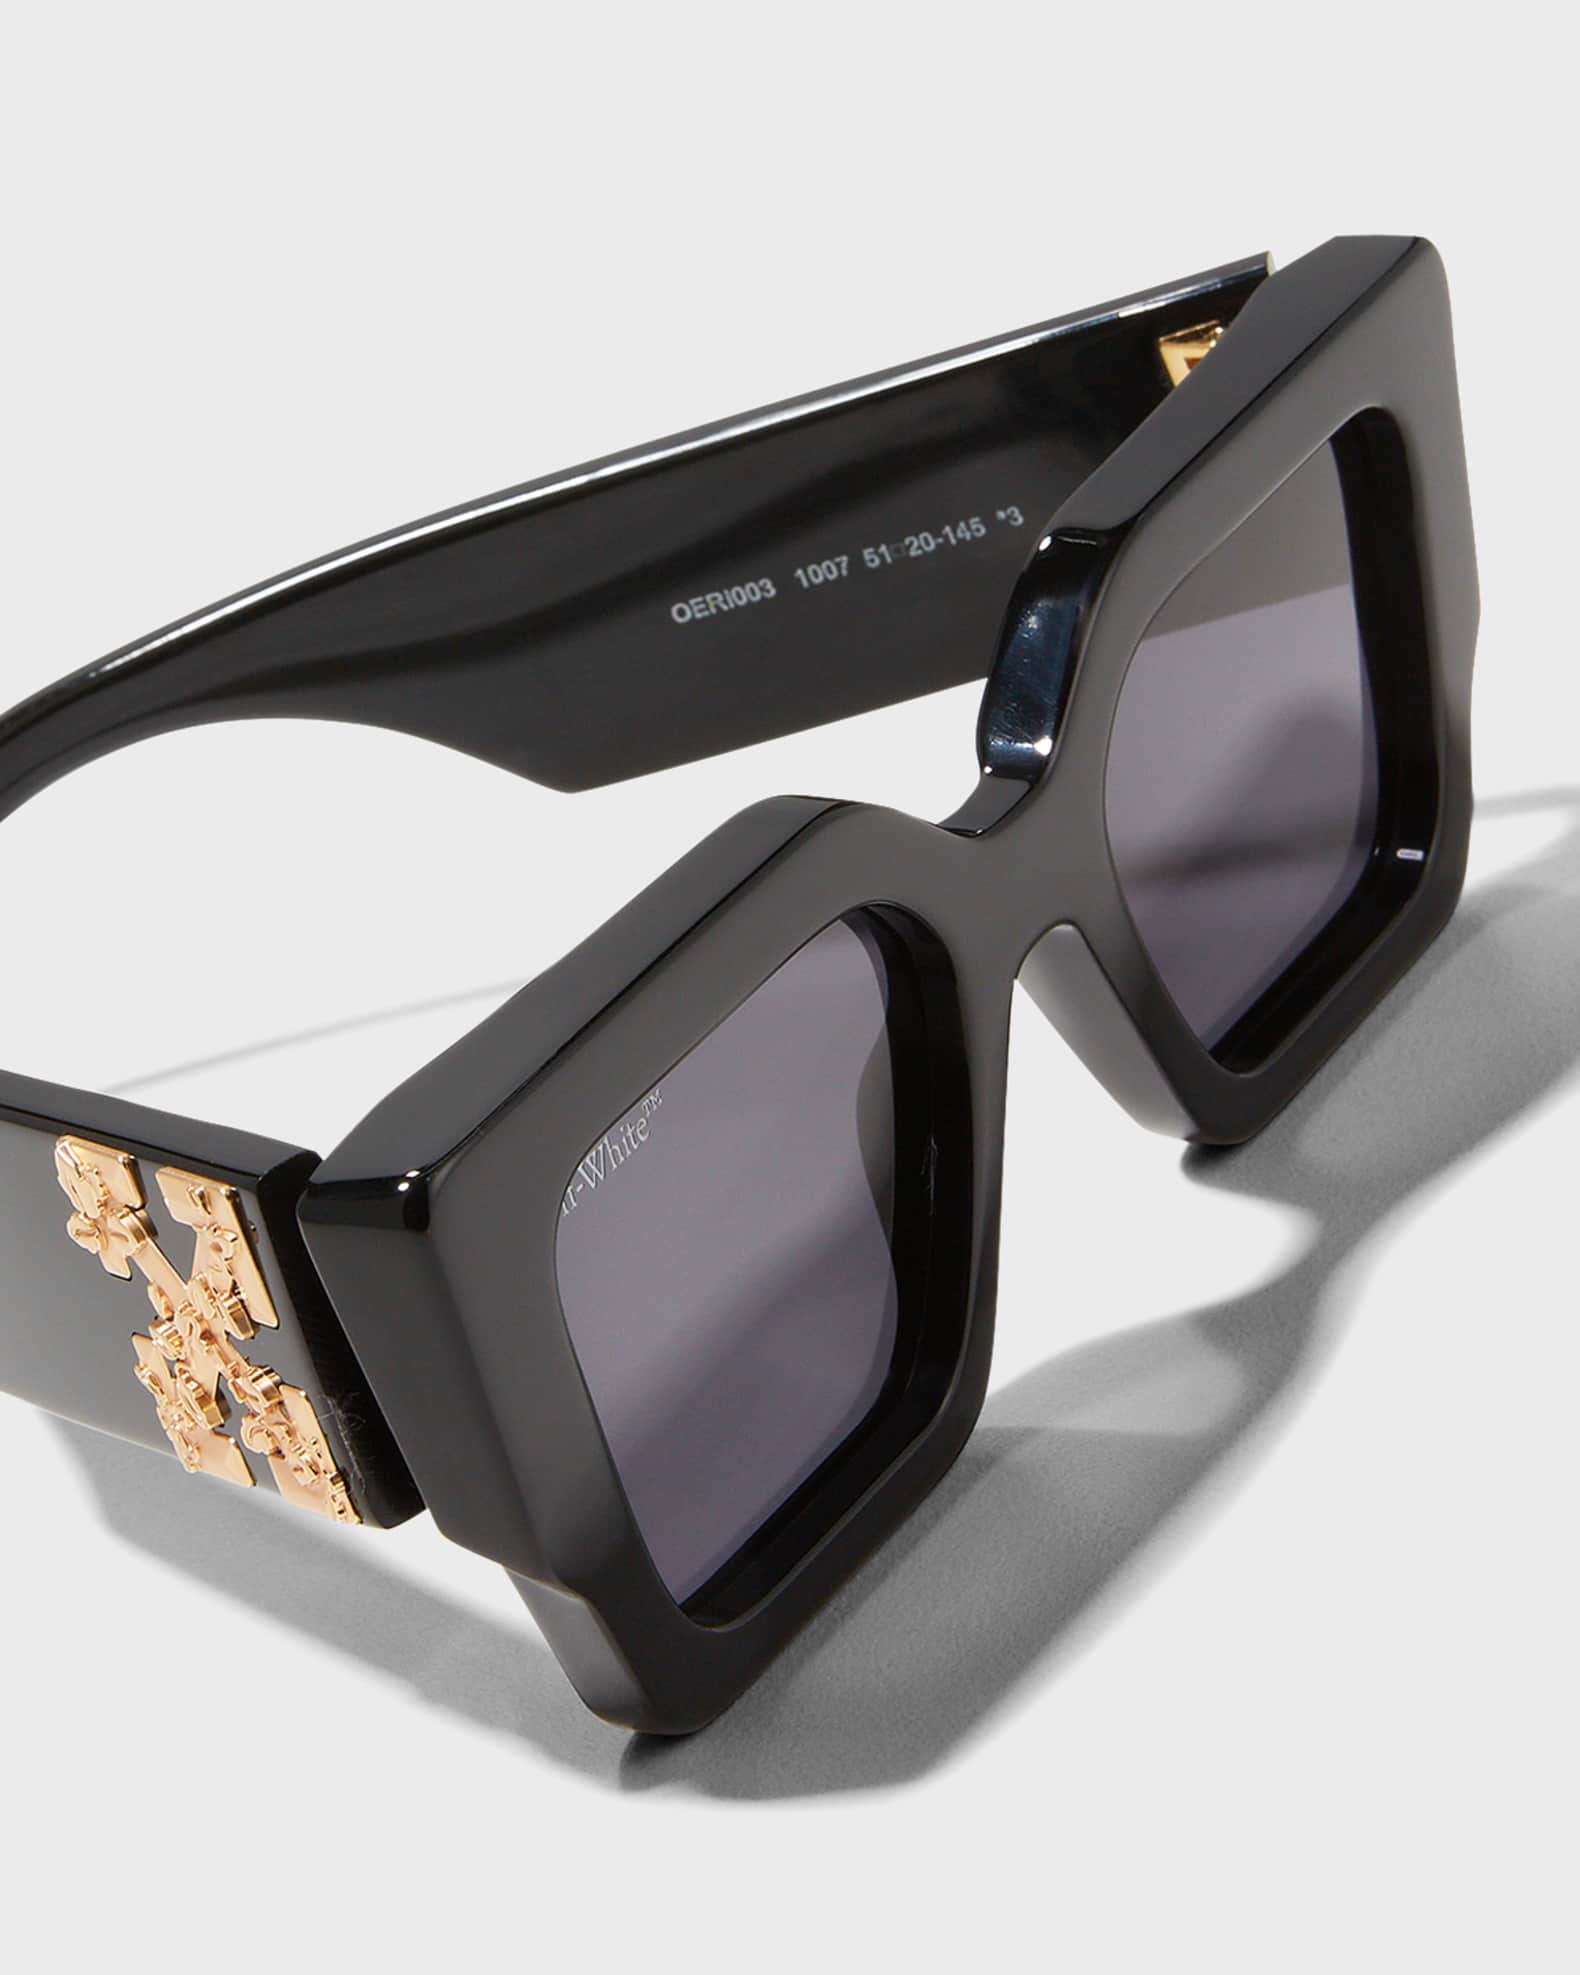 Off-White c/o Virgil Abloh Catalina Sunglasses in Black